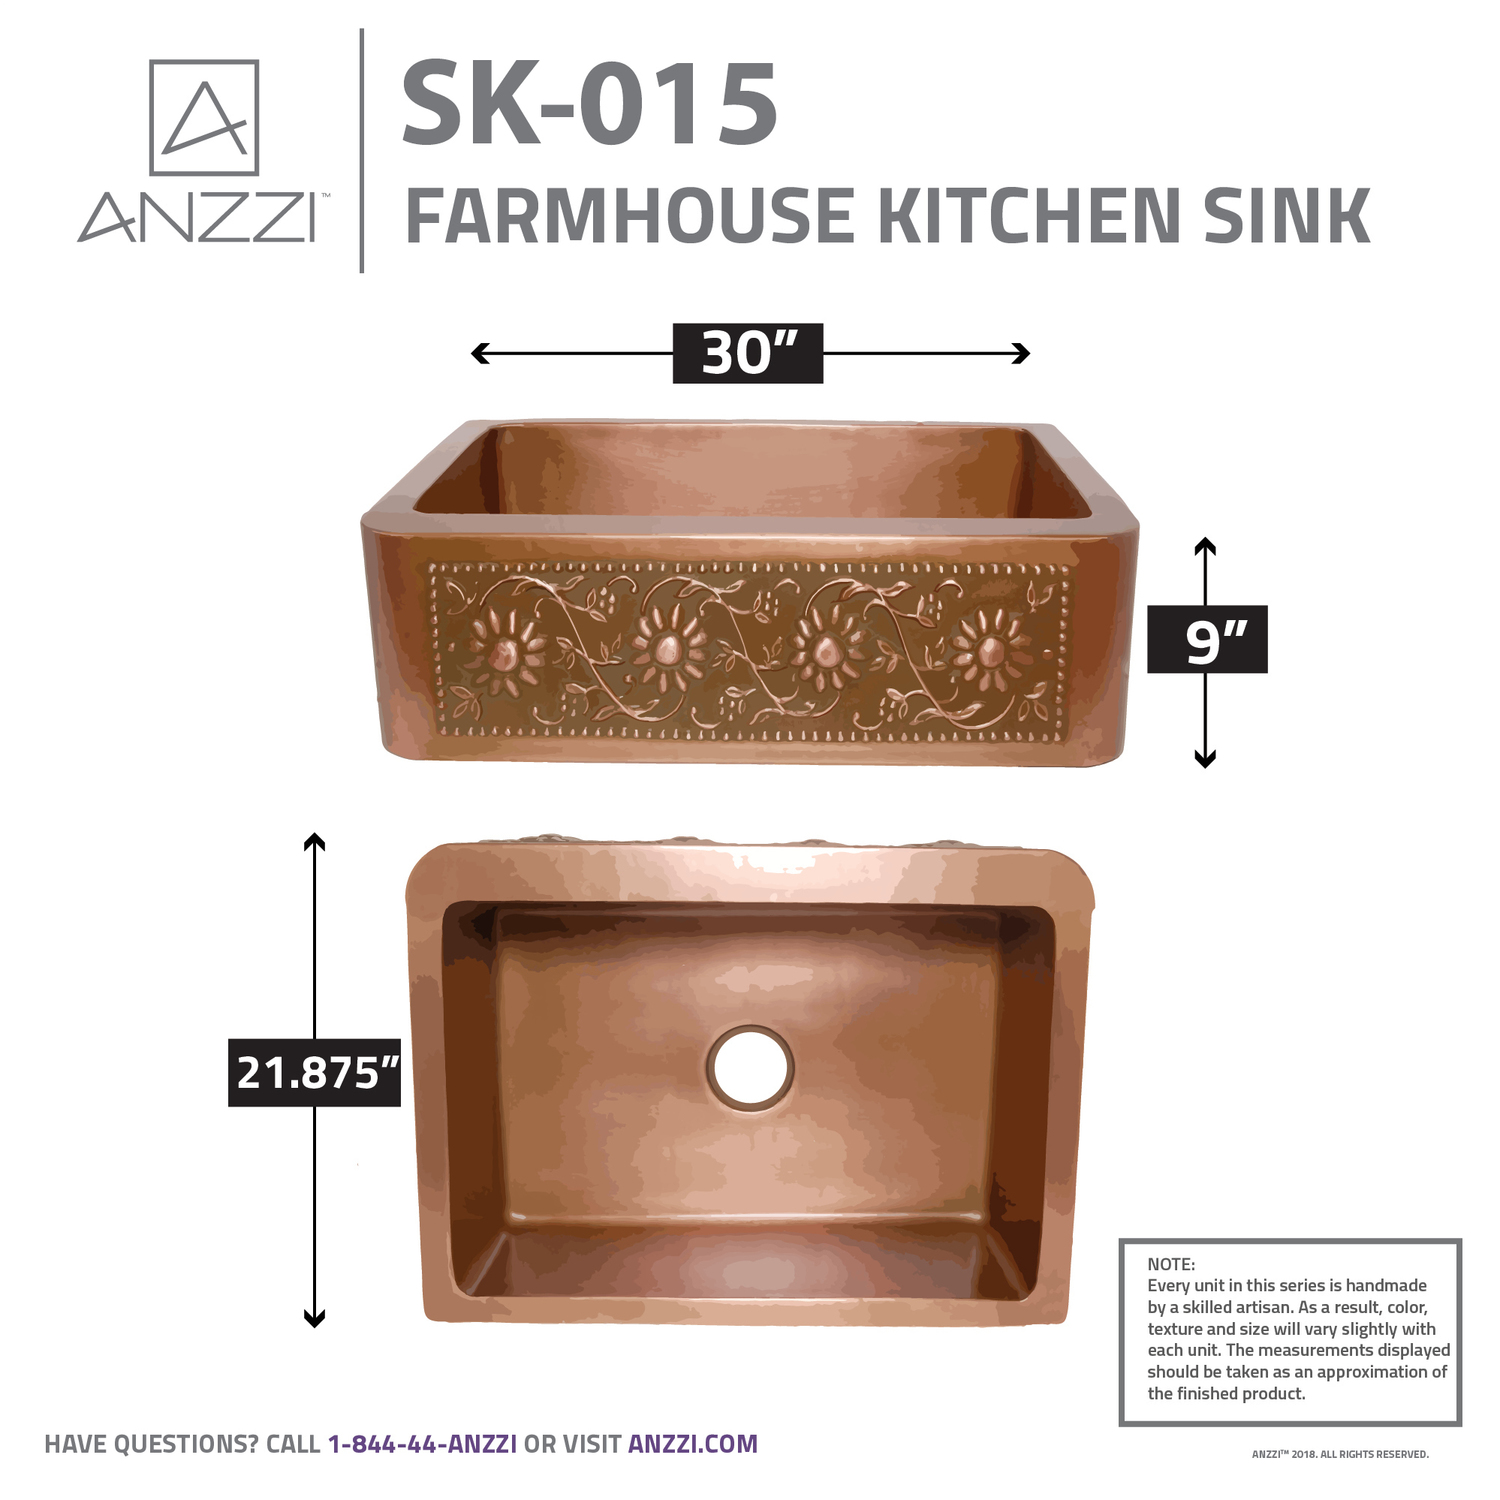 single drainer kitchen sinks Anzzi KITCHEN - Kitchen Sinks - Farmhouse - Copper Copper